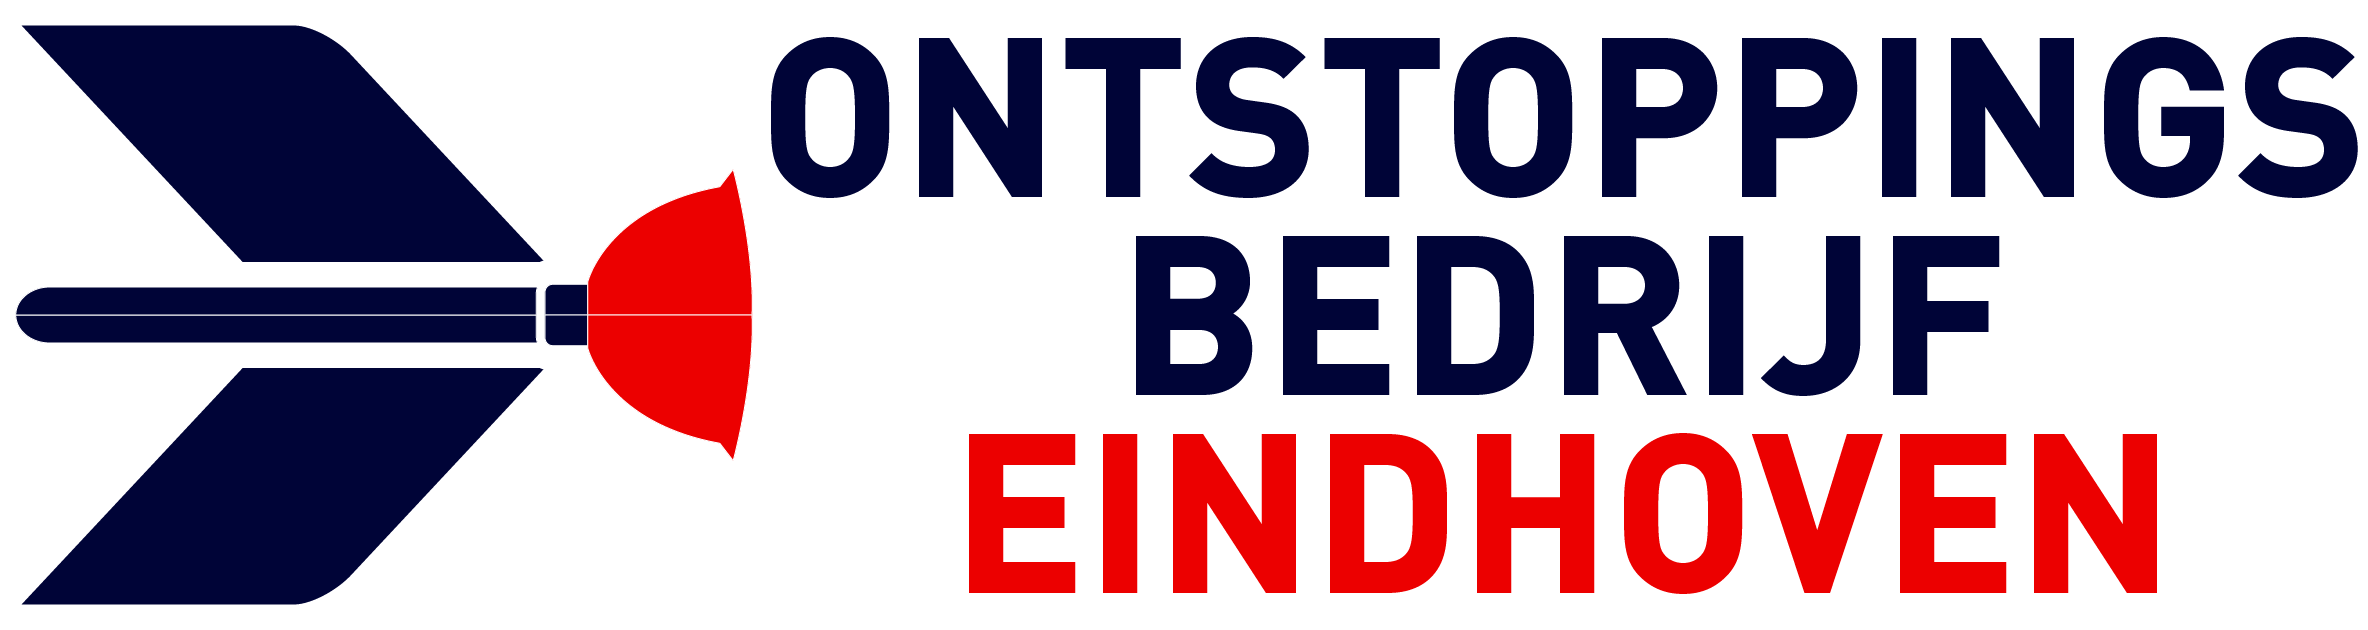 Ontstoppingsbedrijf Eindhoven logo